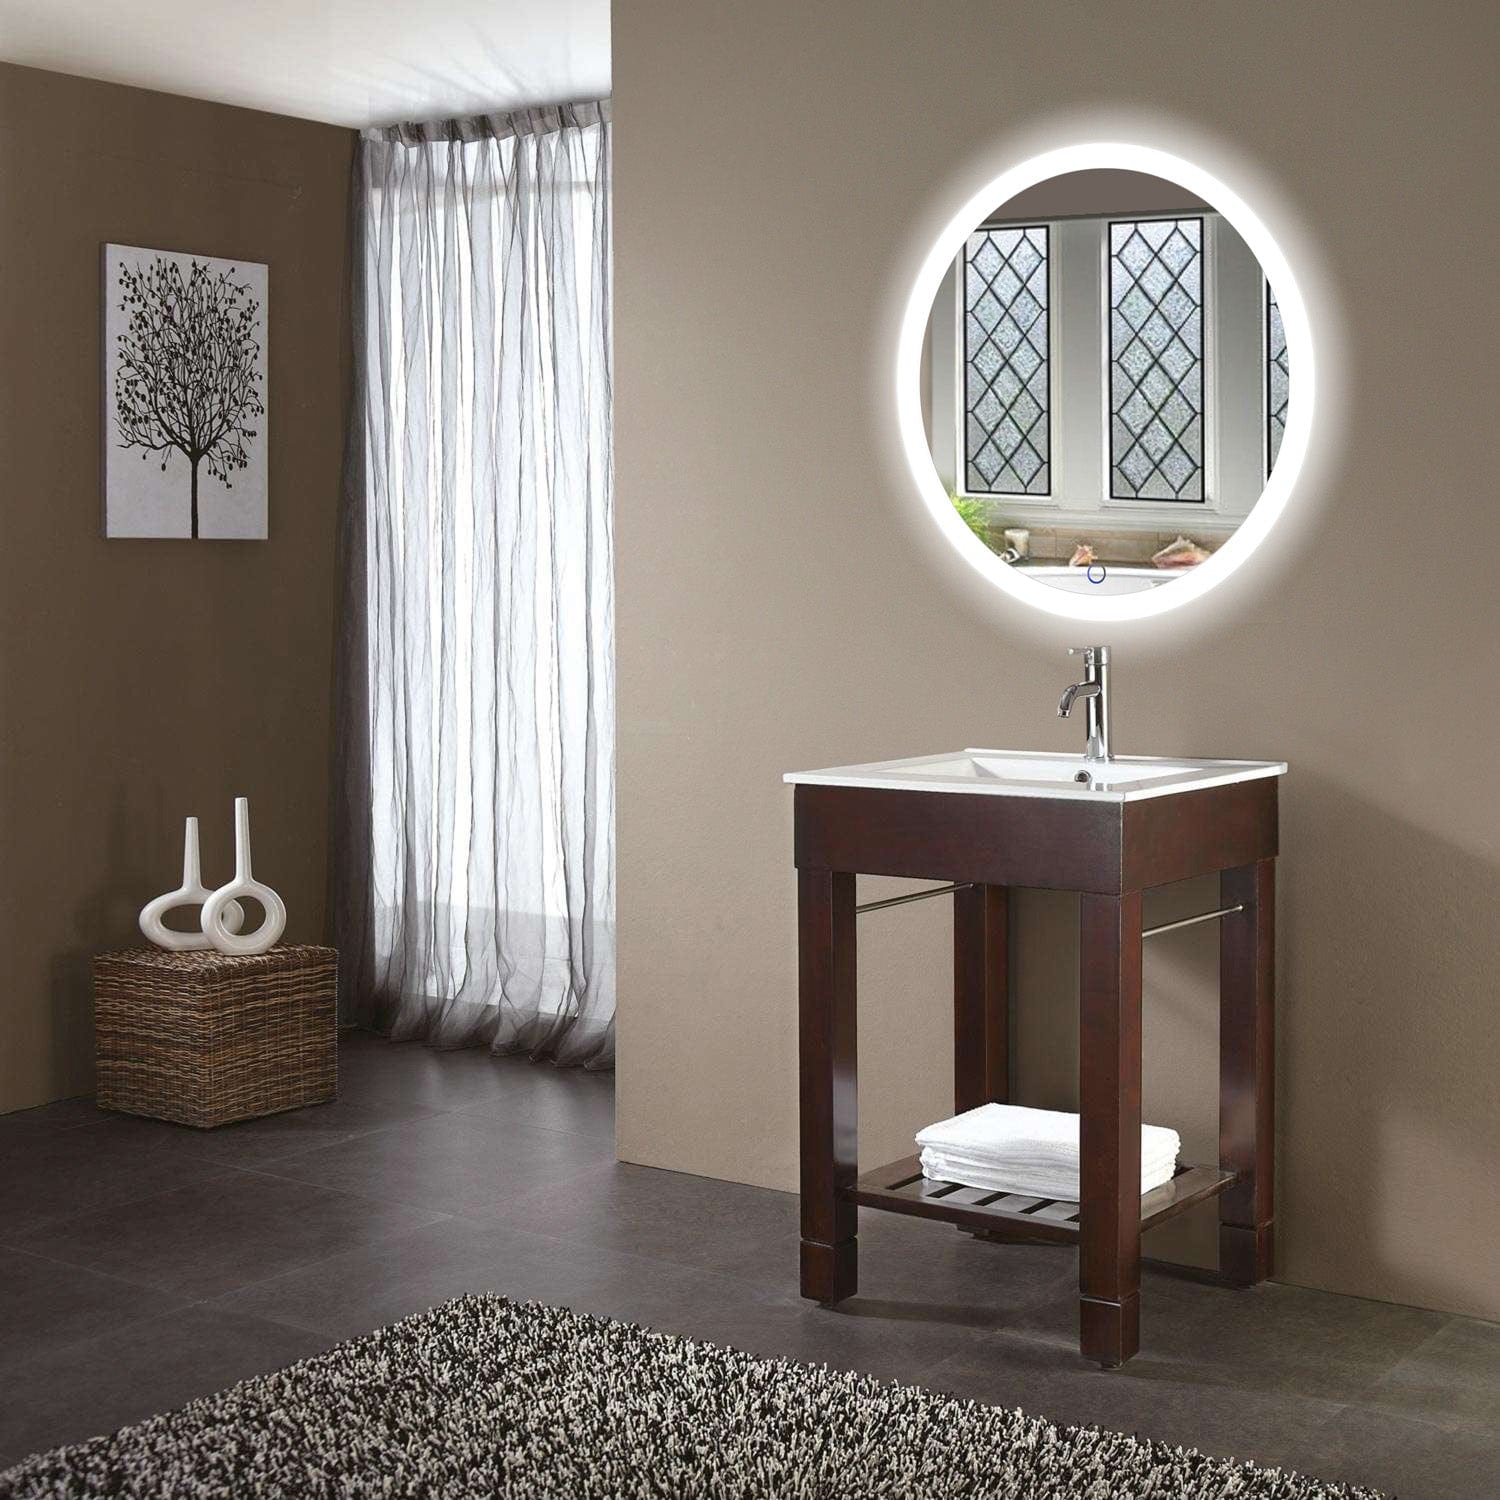 Sol Round 27" x 27" LED Bathroom Mirror w/ Dimmer & Defogger | Round Back-lit Vanity Mirror - Molaix - Molaix635833354763Lighted Wall Mirror,RoundSOL2727R